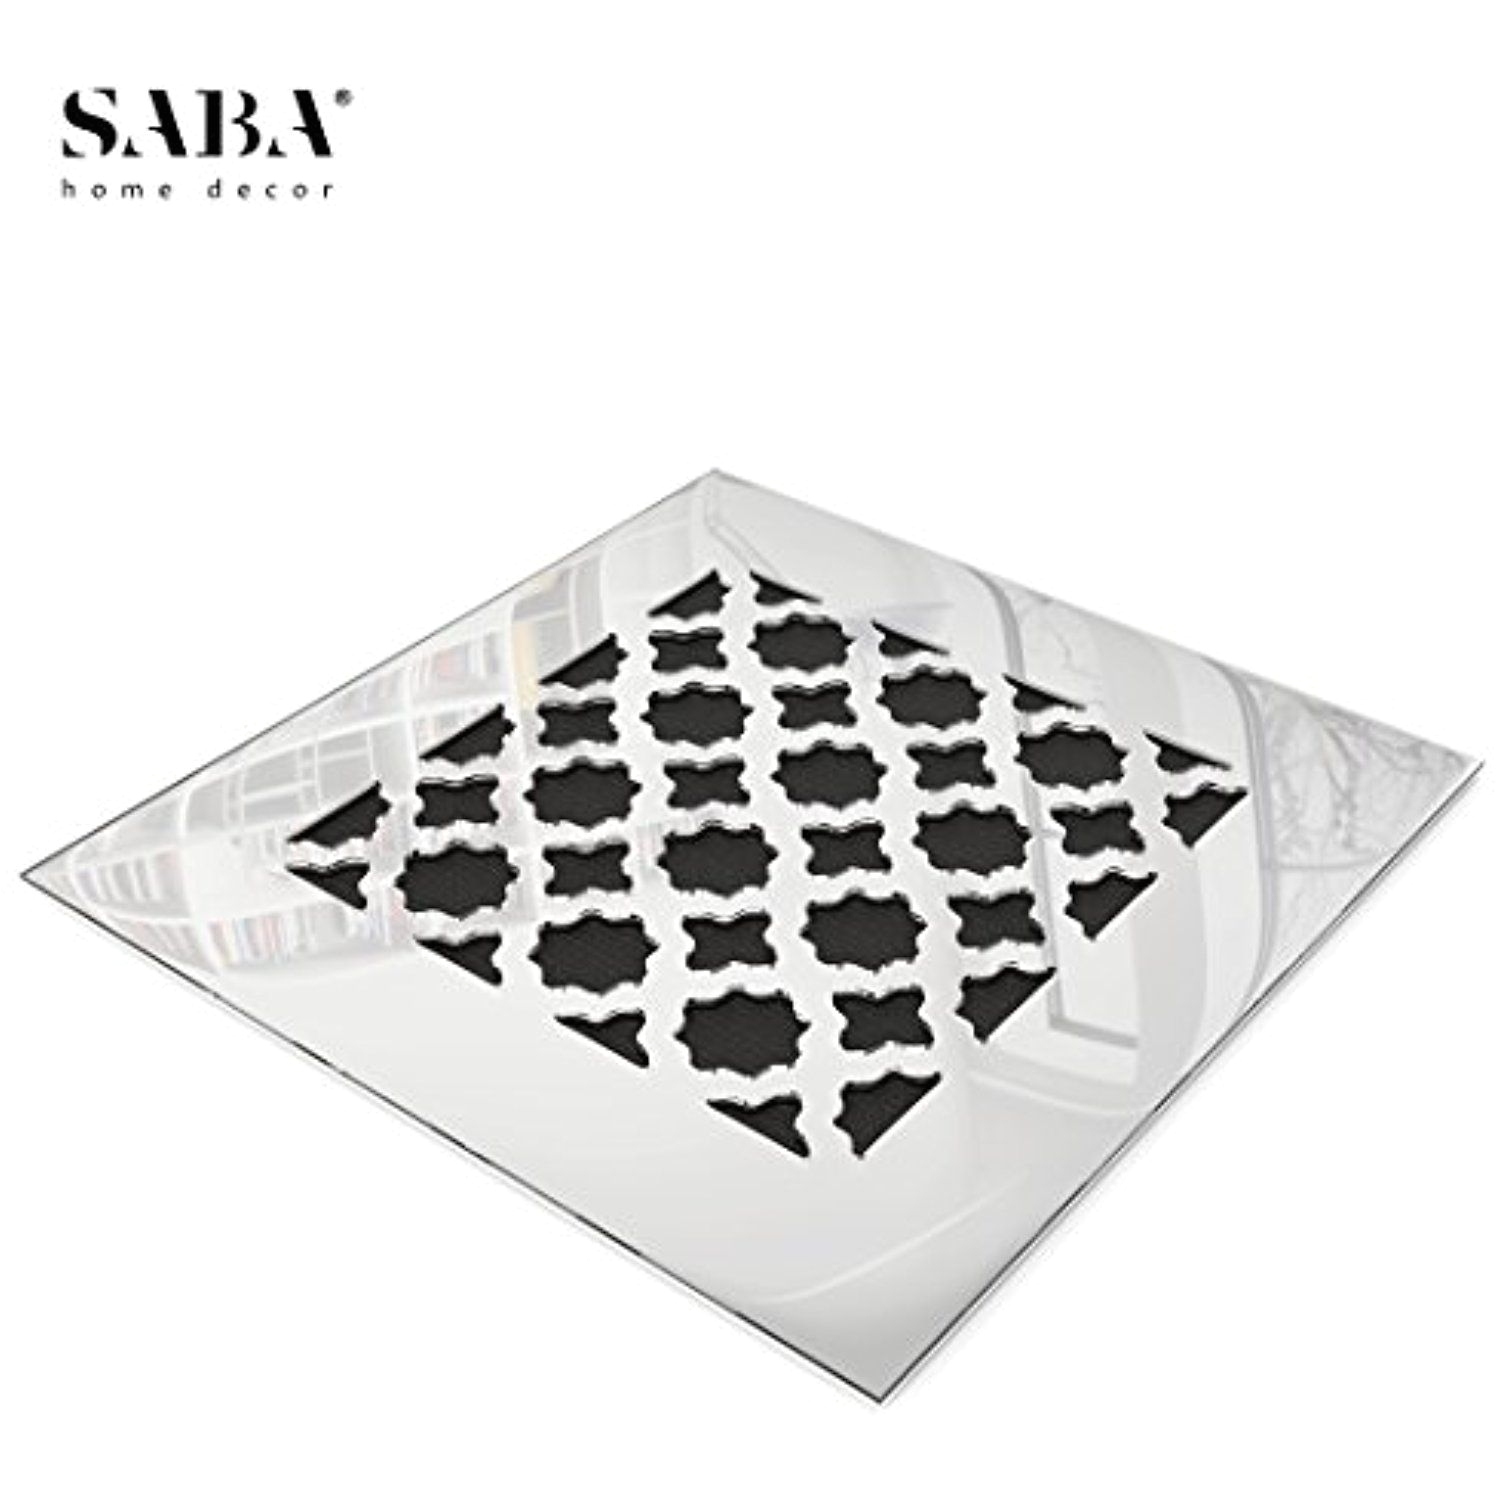 saba fiberglass decorative grille vent return register easy air flow venetian style cover 8 inch x